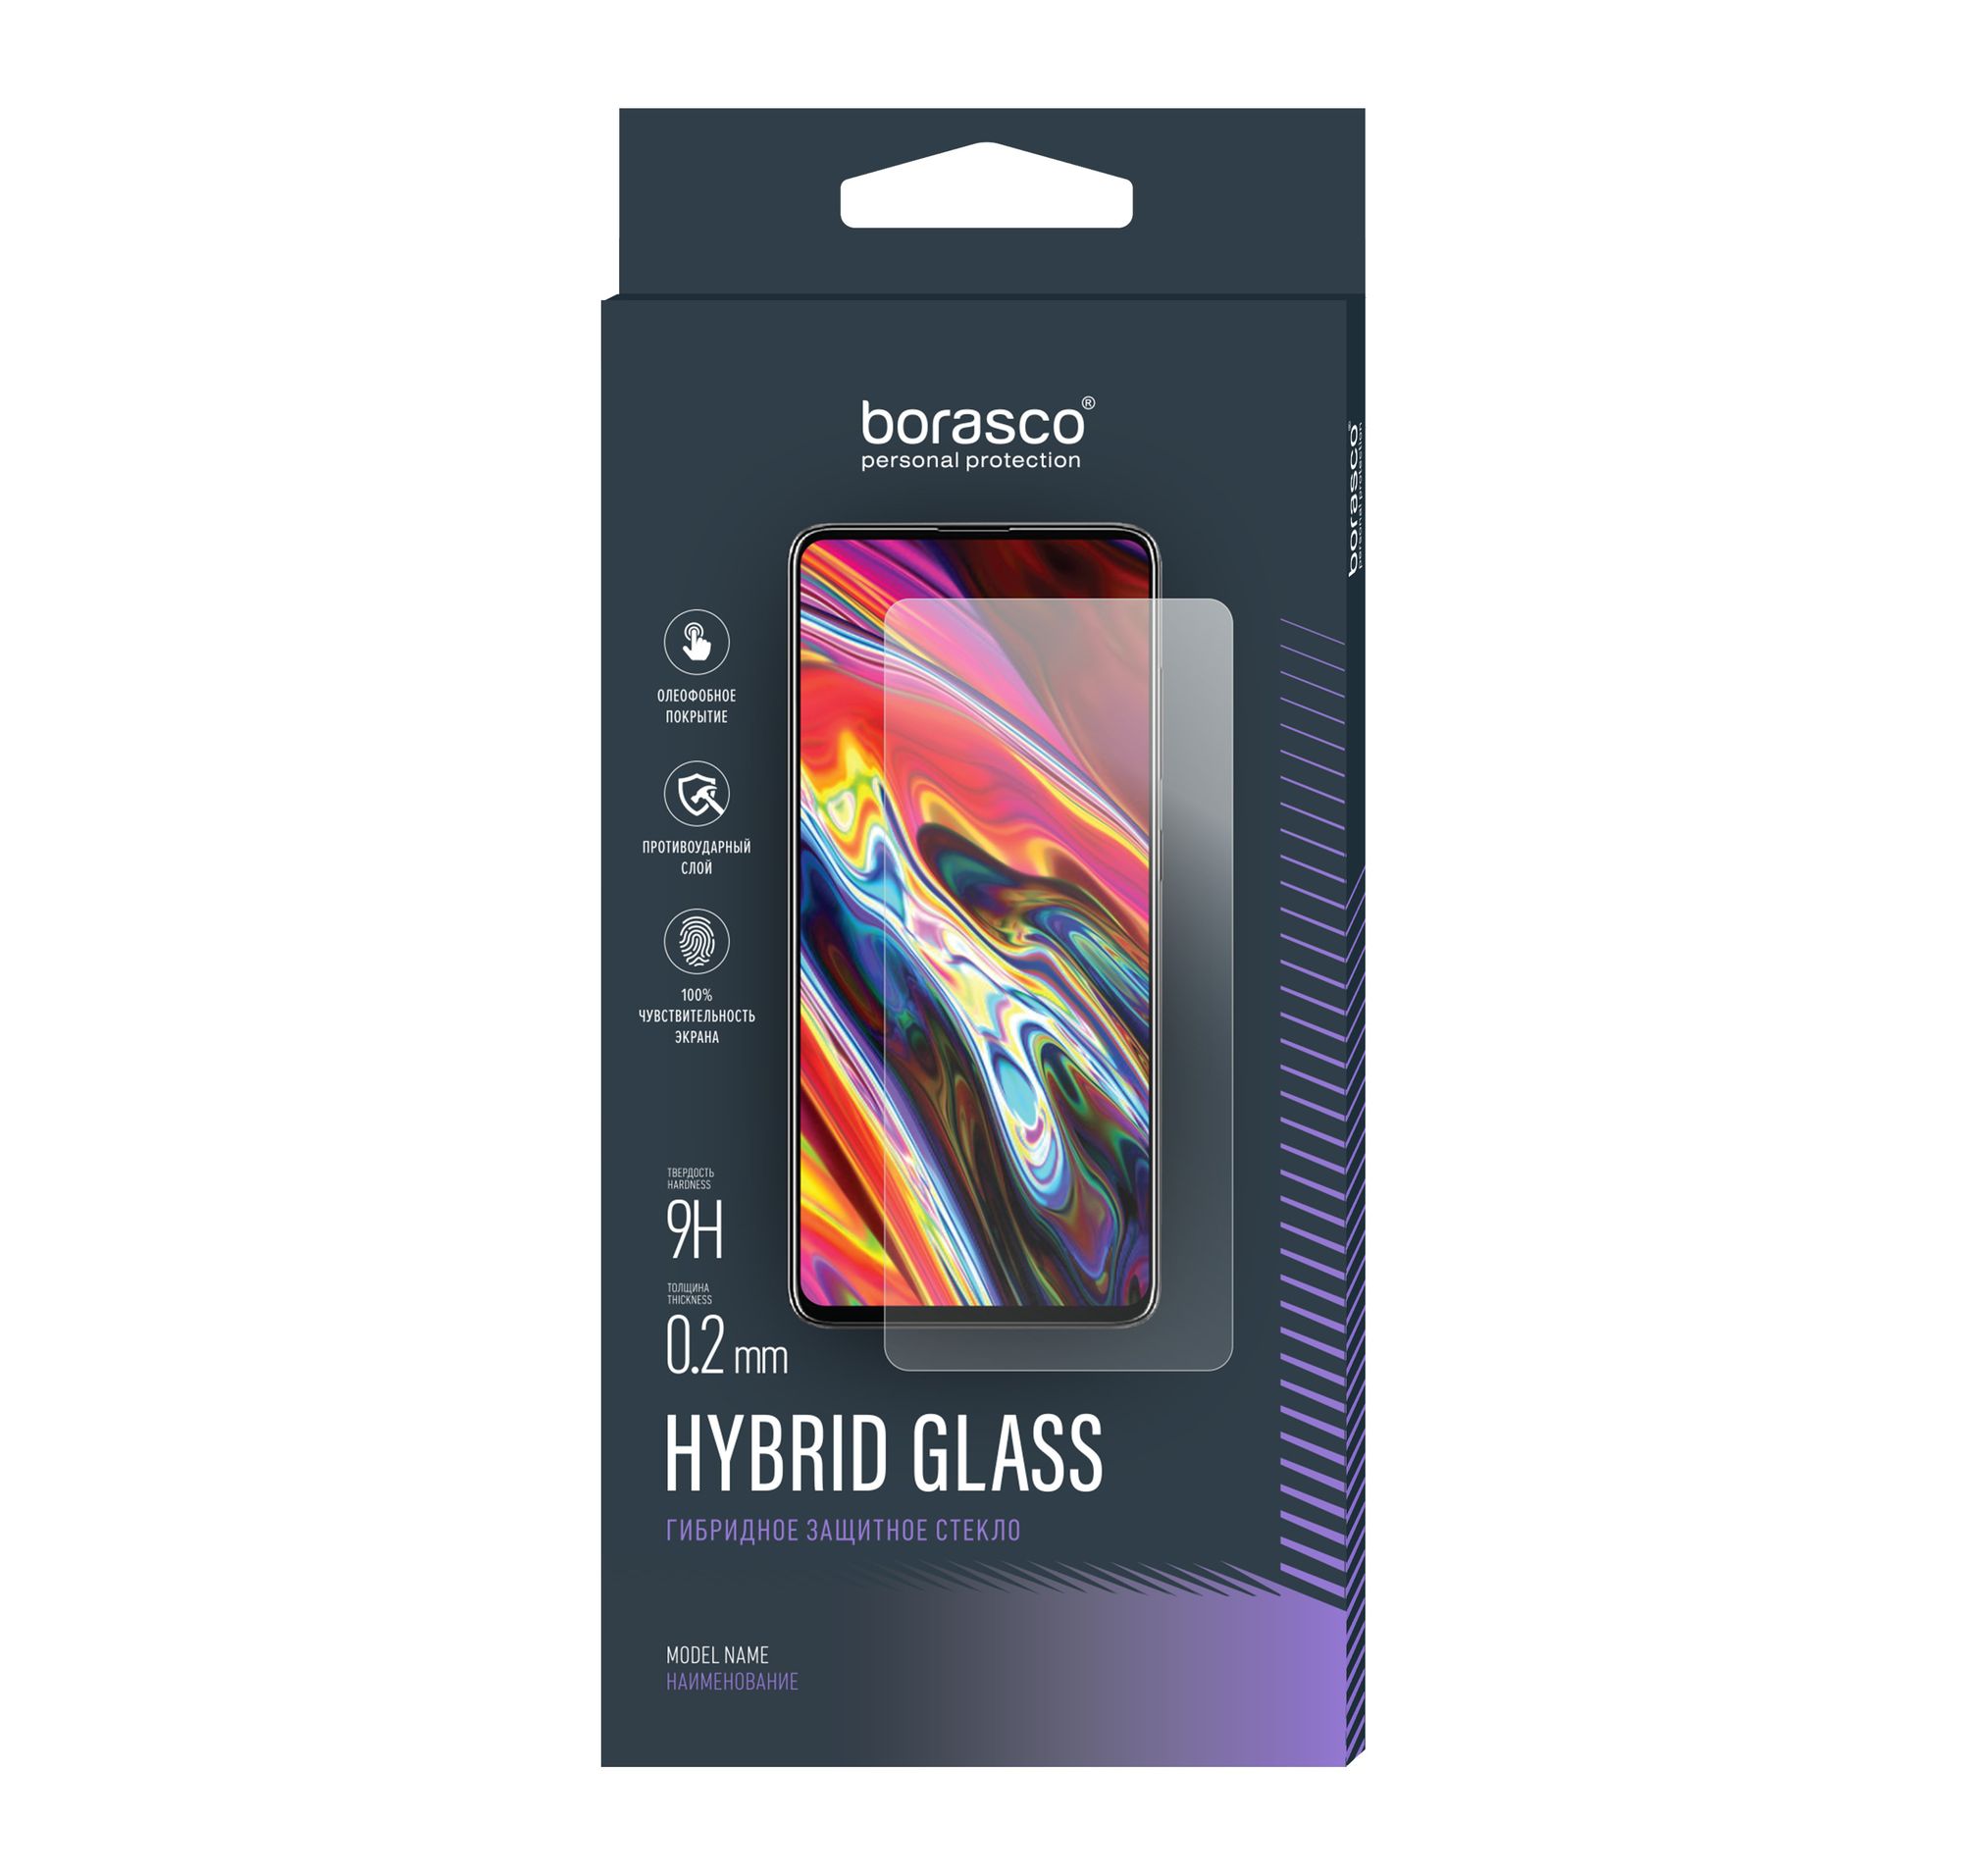 Стекло защитное Hybrid Glass VSP 0,26 мм для ASUS Zenfone 4 Max M1 ZB555KL закаленное стекло для asus zenfone max m1 zb555kl полное покрытие защитное стекло для экрана zb555kl x00pd 5 5